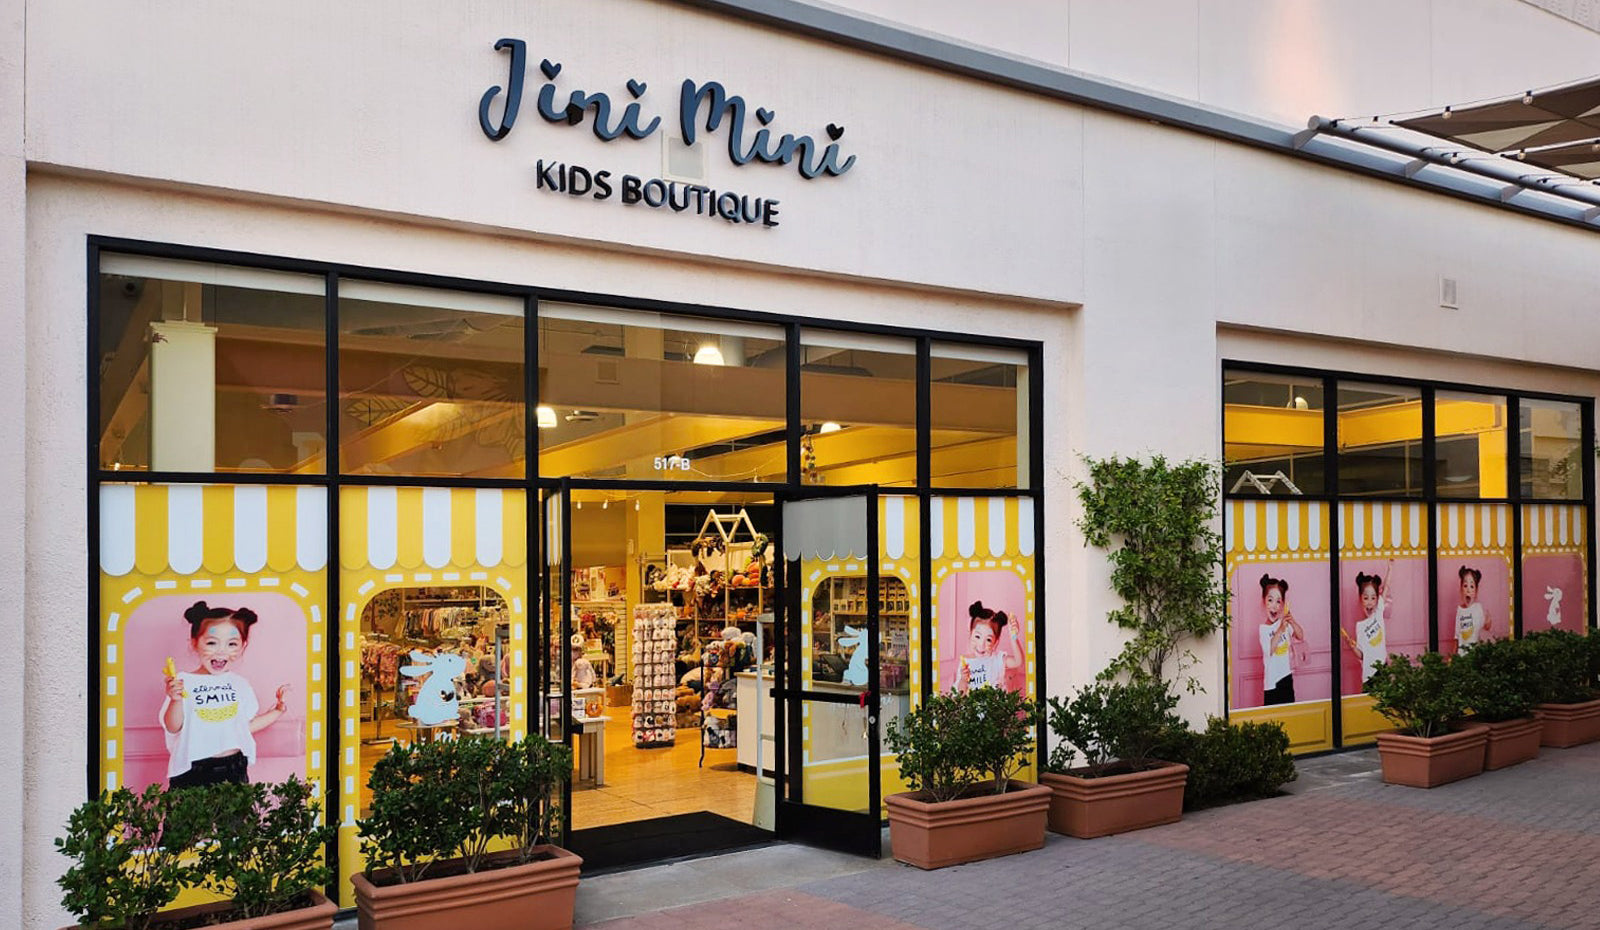 Jini Mini kids boutique